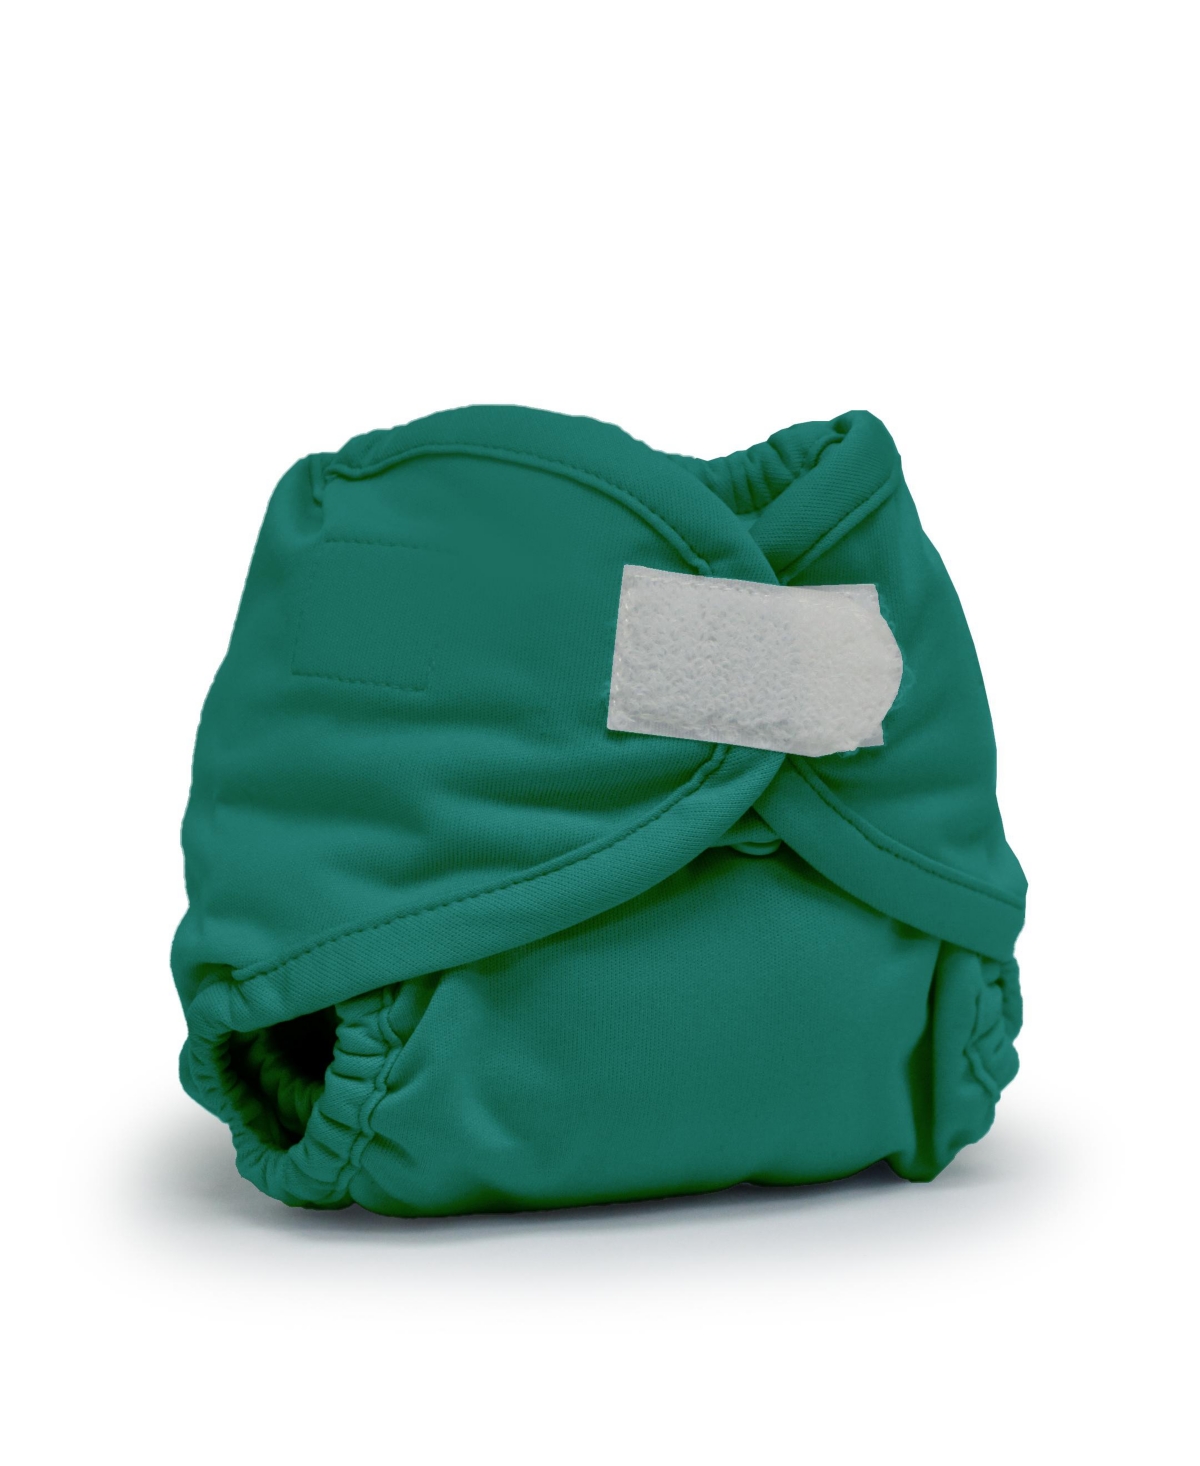 Kanga Care Babies' Rumparooz Reusable Newborn Cloth Diaper Cover Aplix In Peacock